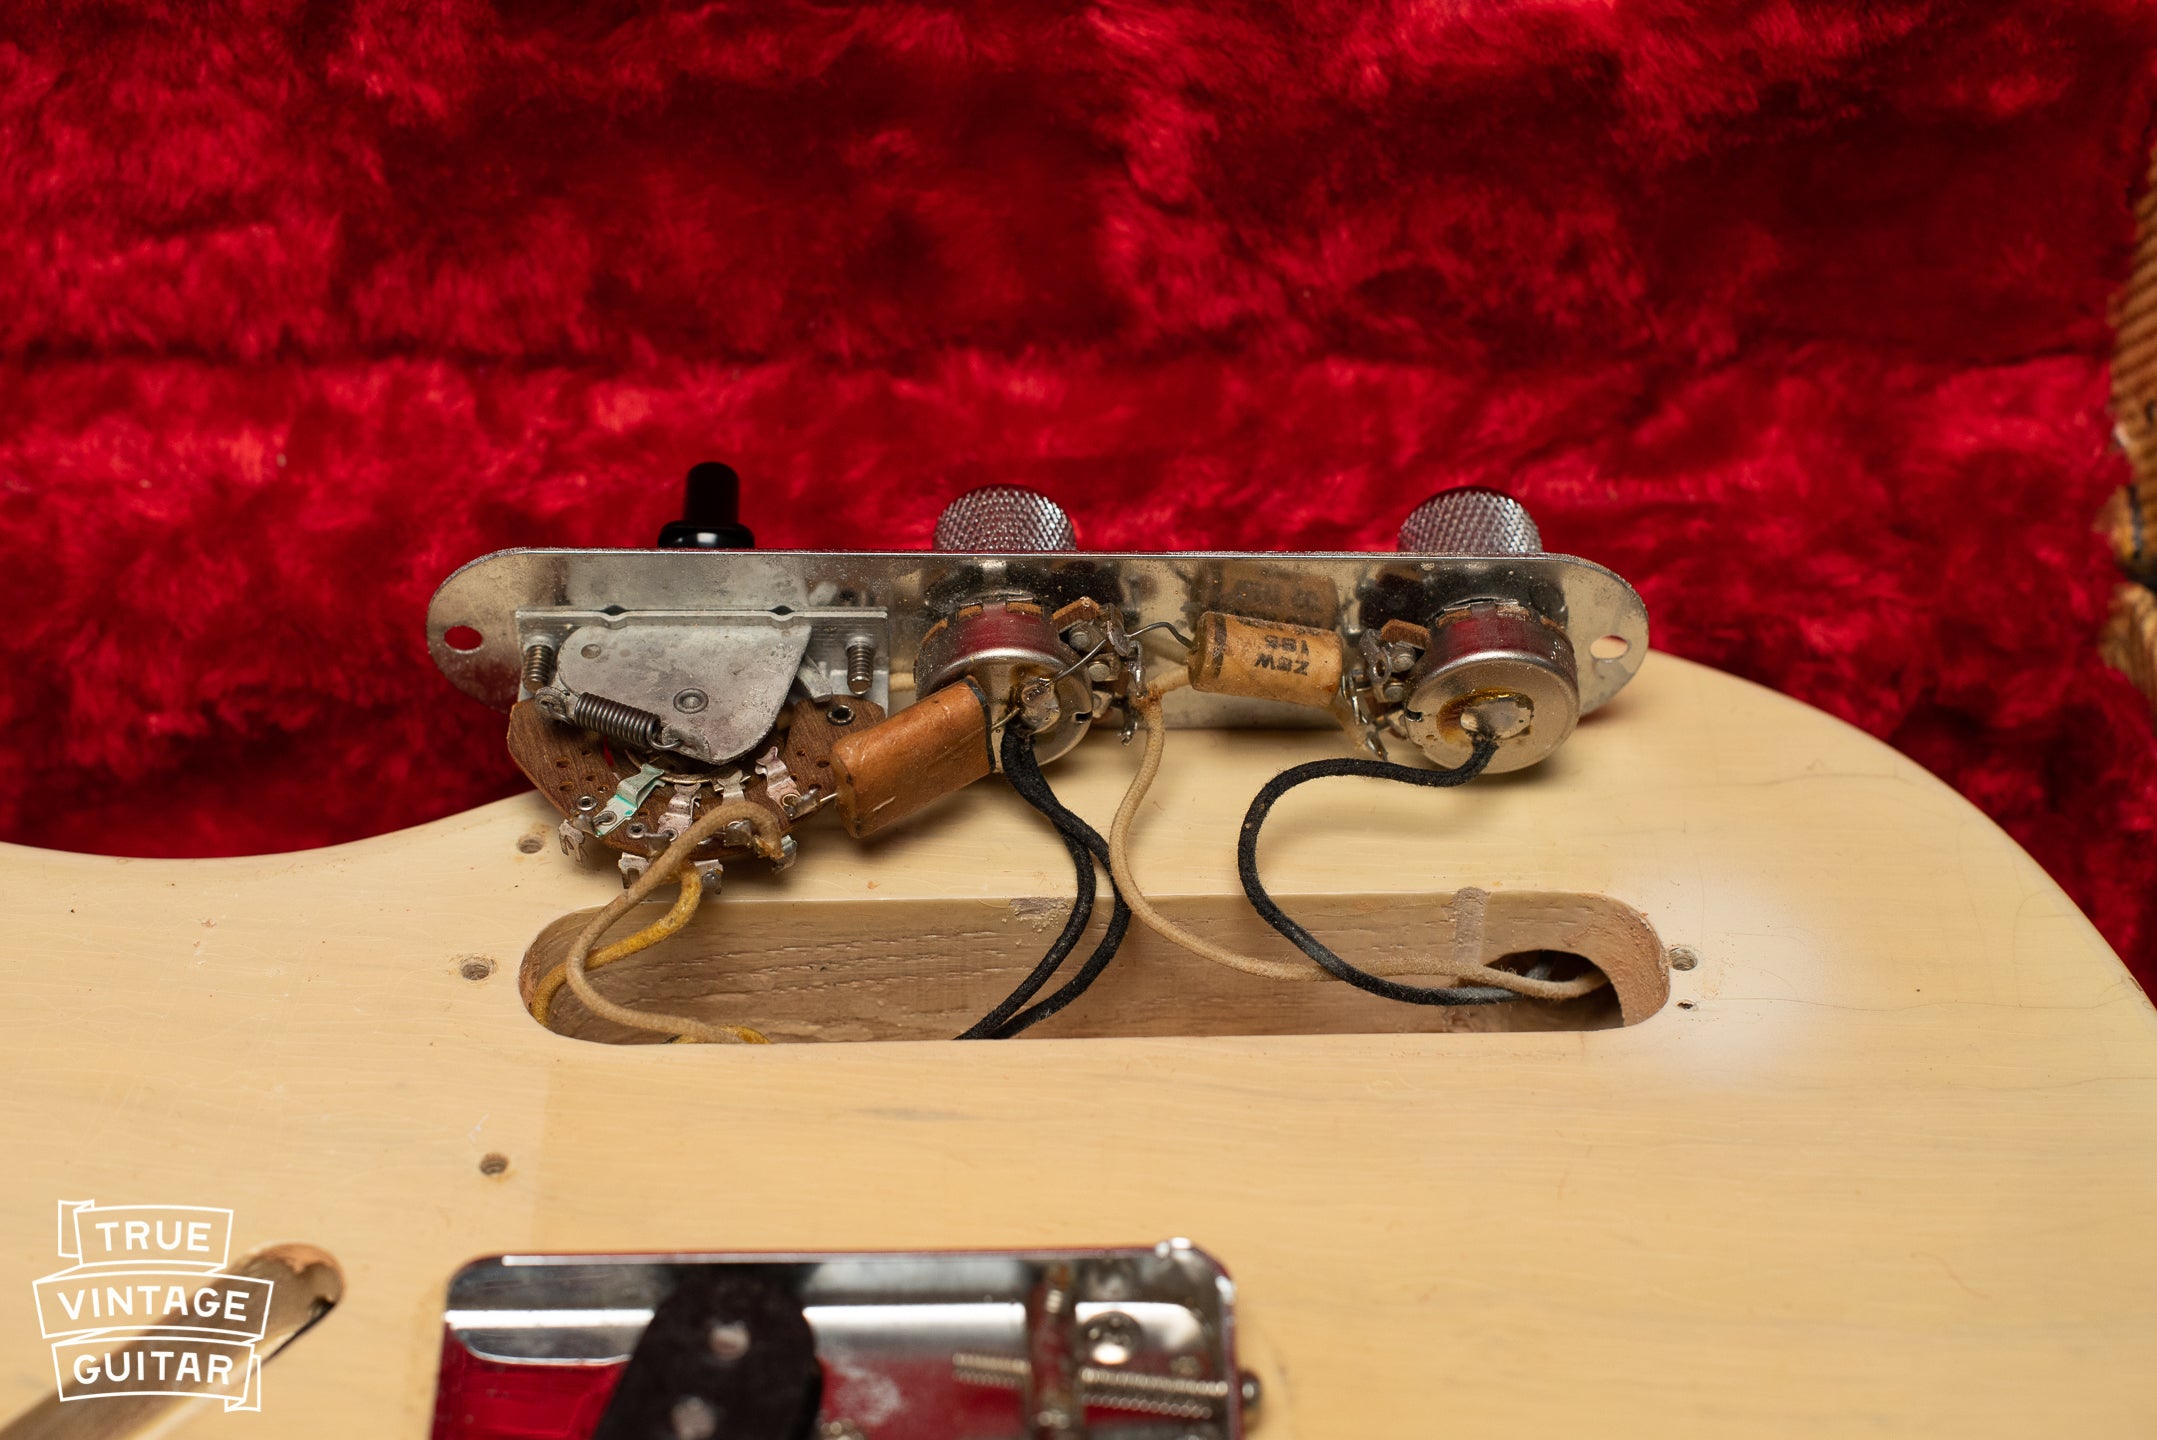 1957 Fender Telecaster Blond electronics cavity, control plate